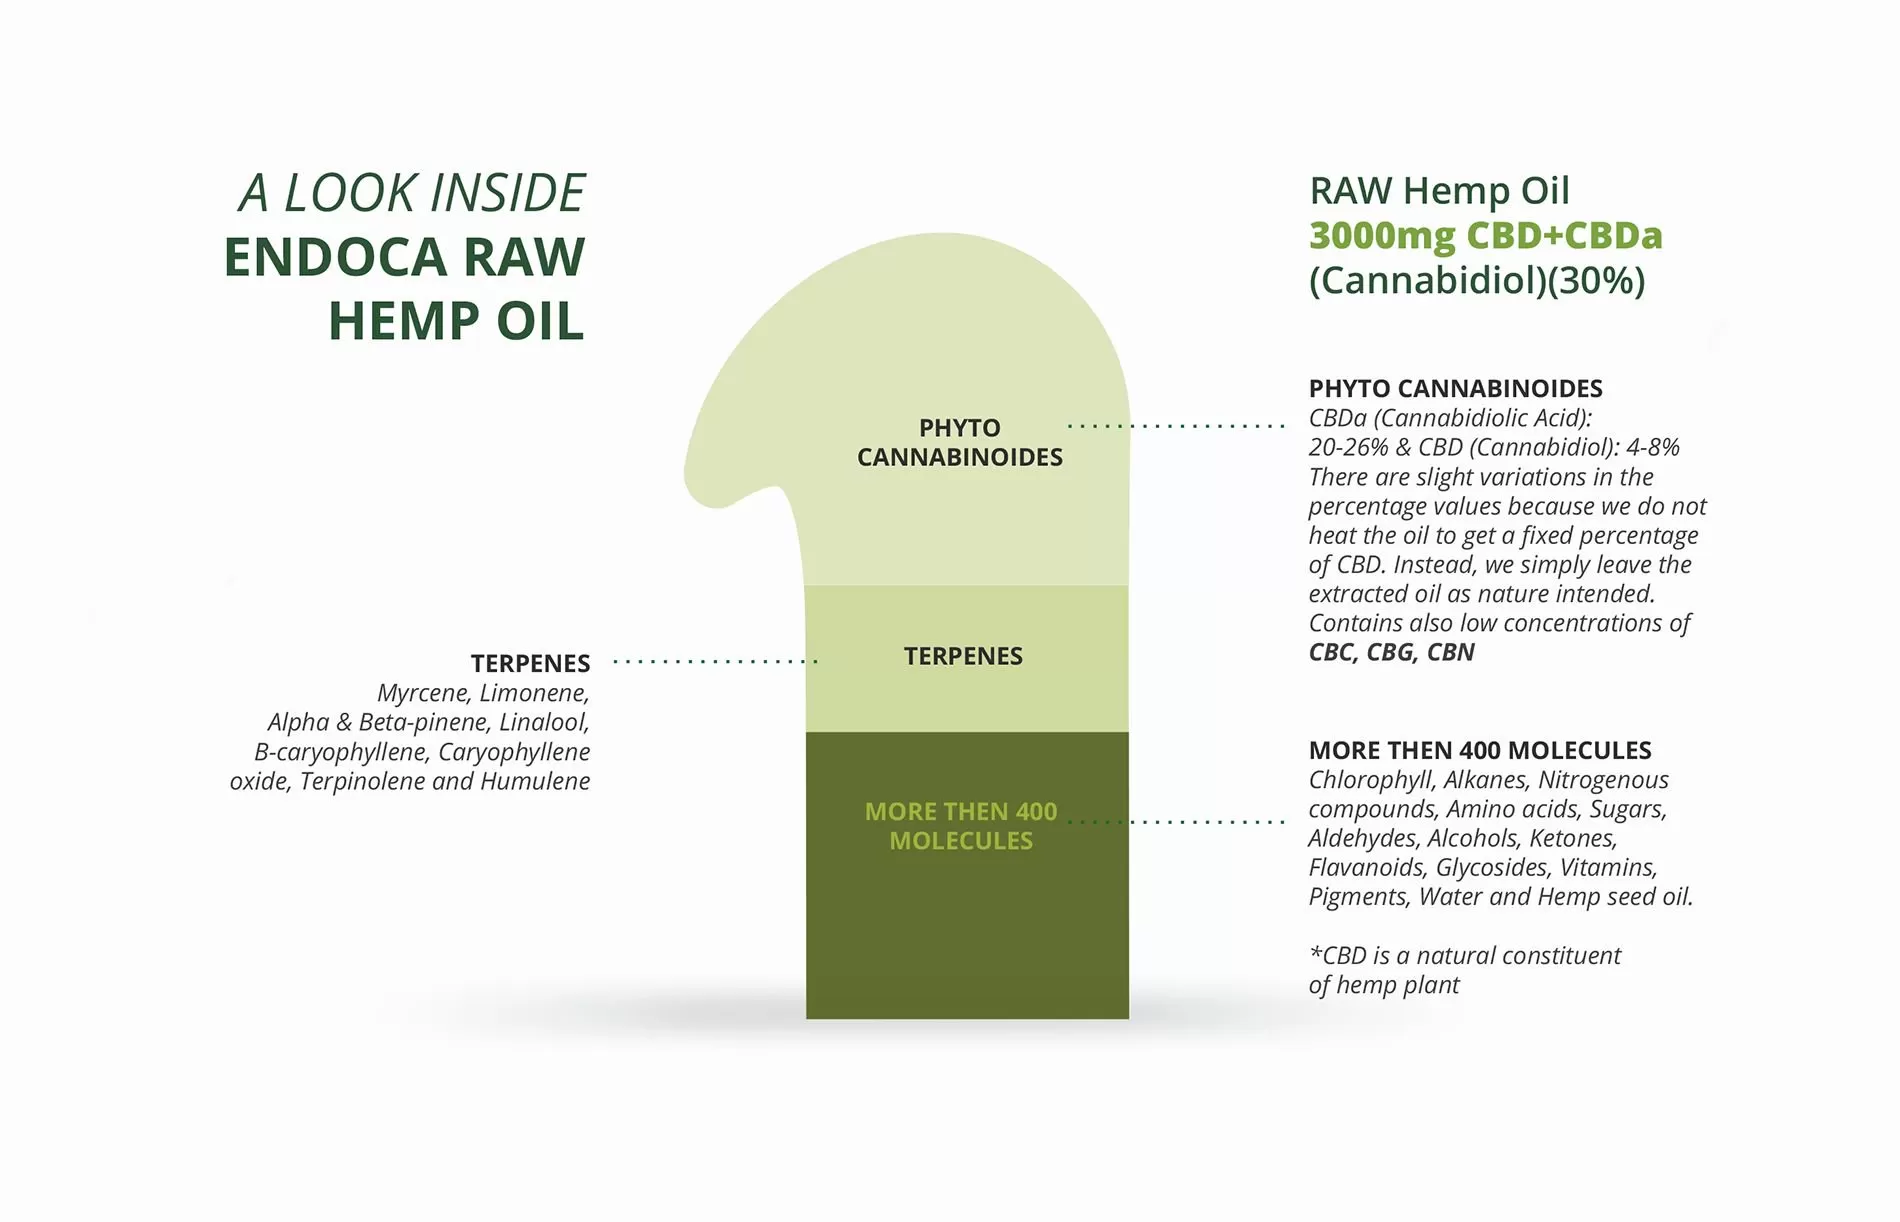 Endoca 3000mg CBD+CBDa RAW hemp oil paste extract contents